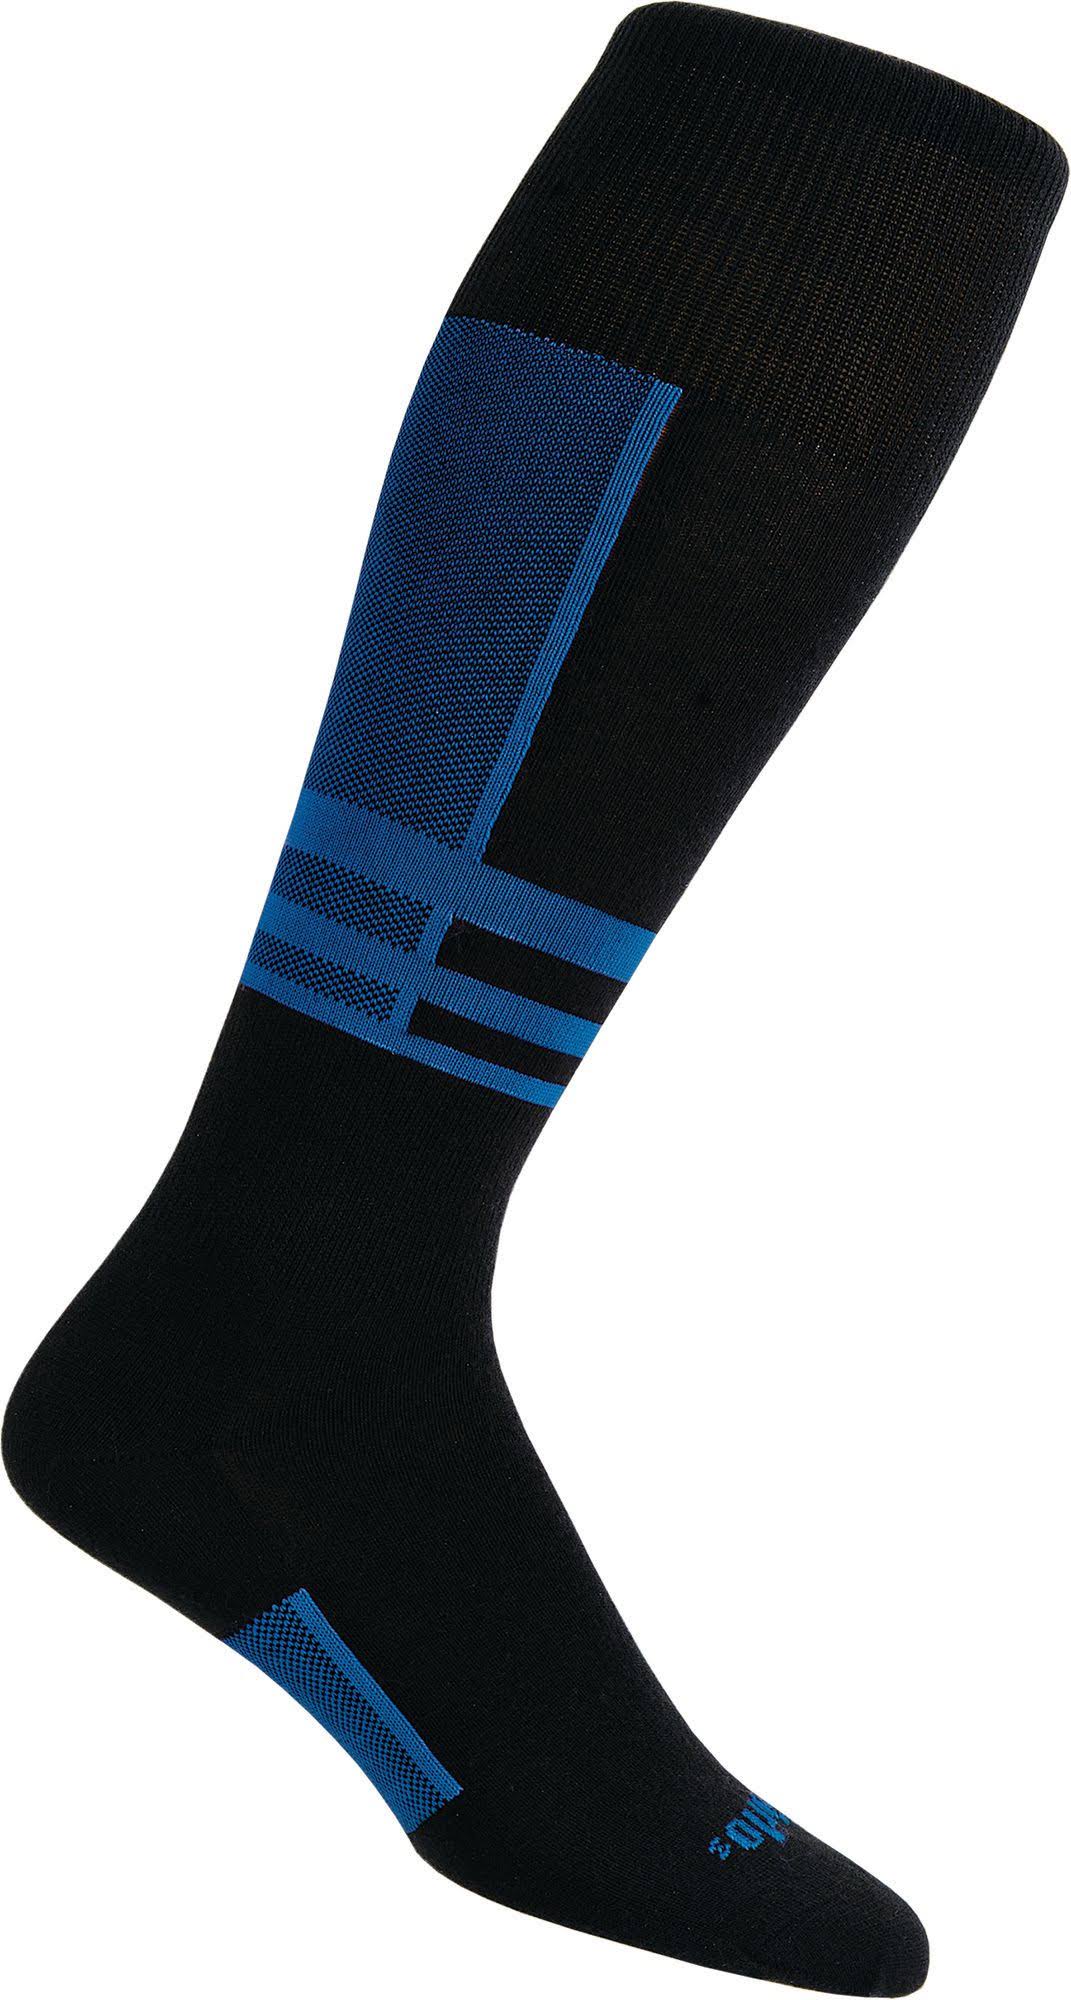 Thorlos Ultra Thin Custom Ski Socks - Black and White, Small